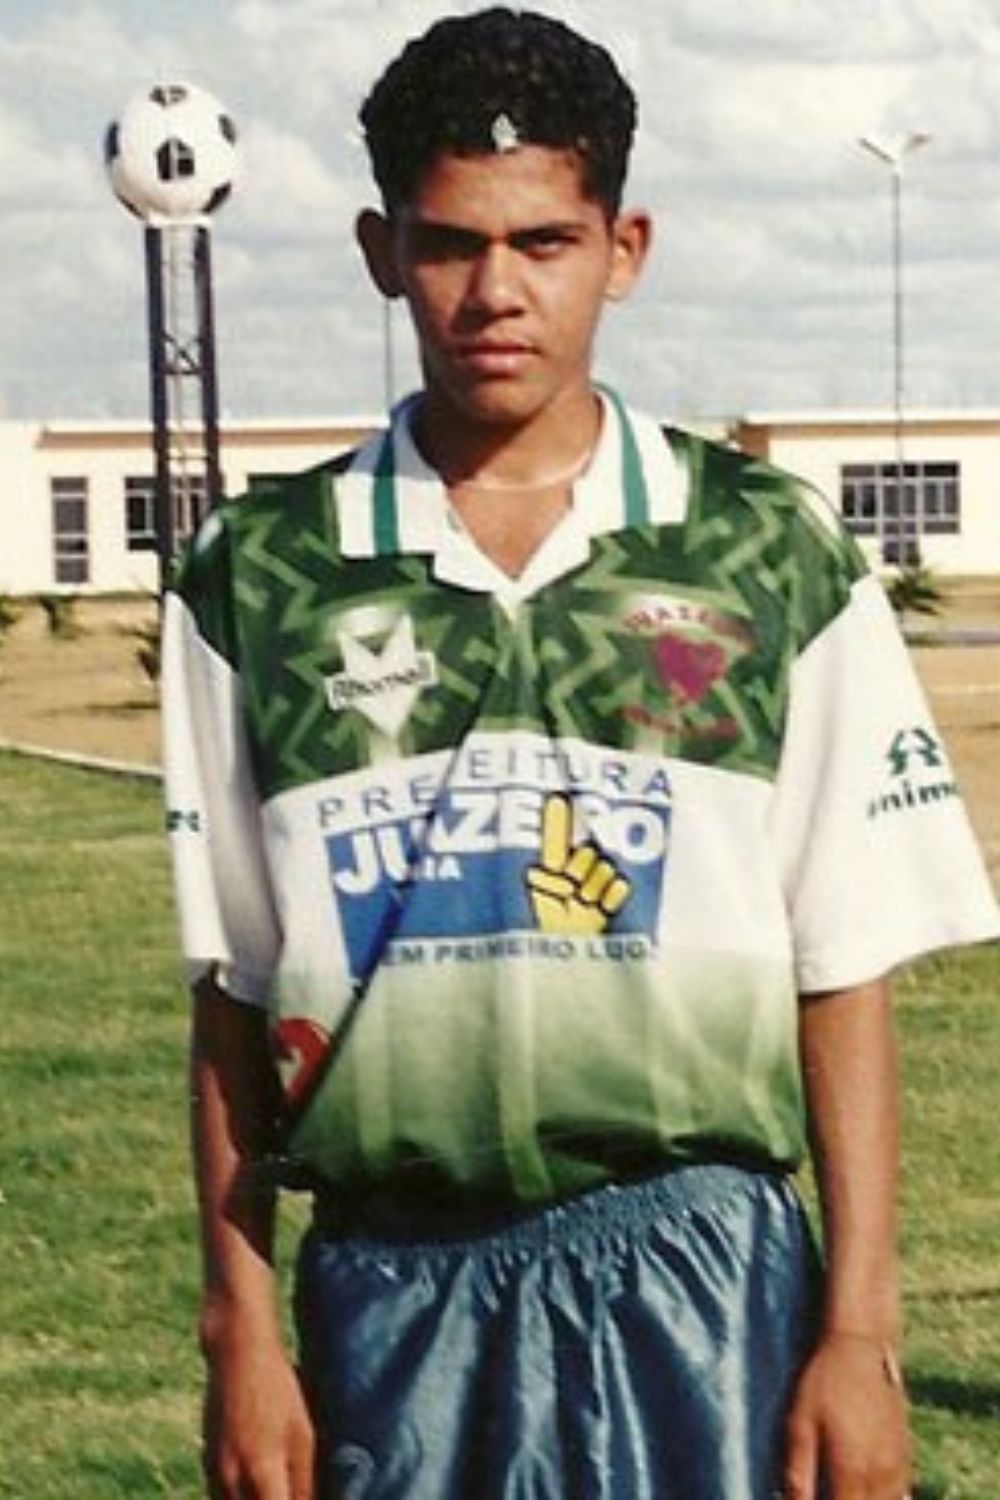 Dani Alves At His Young Age (Source Pinterest)